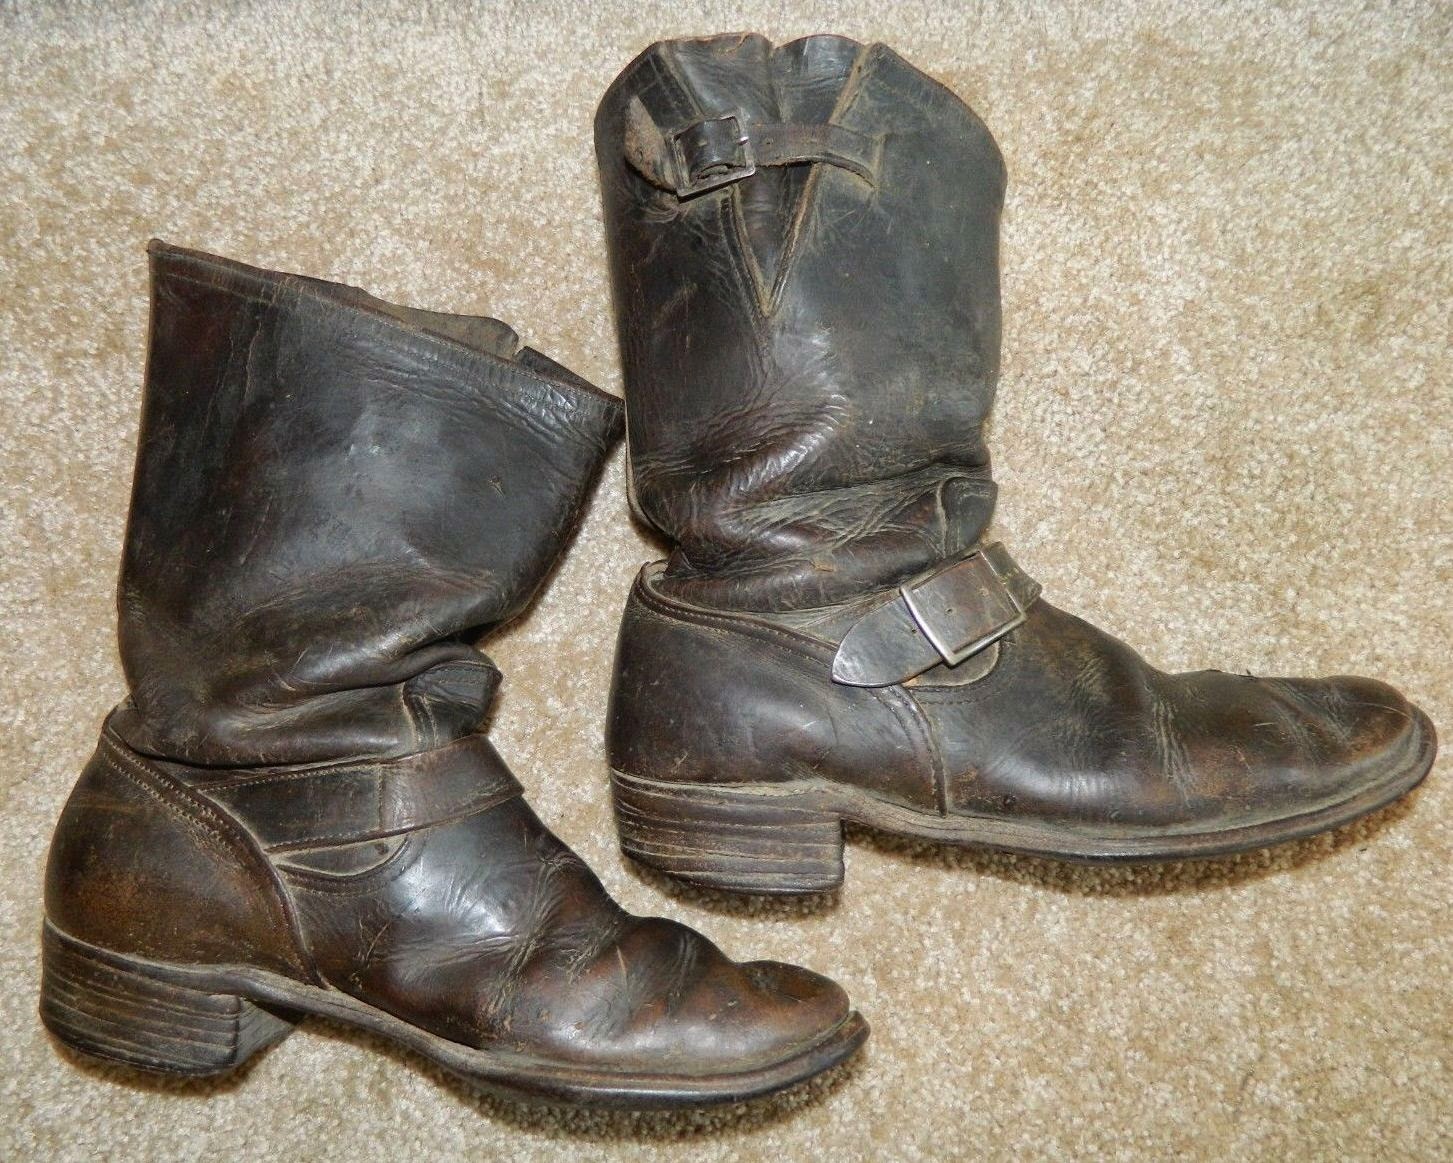 Vintage Engineer Boots: August 2014